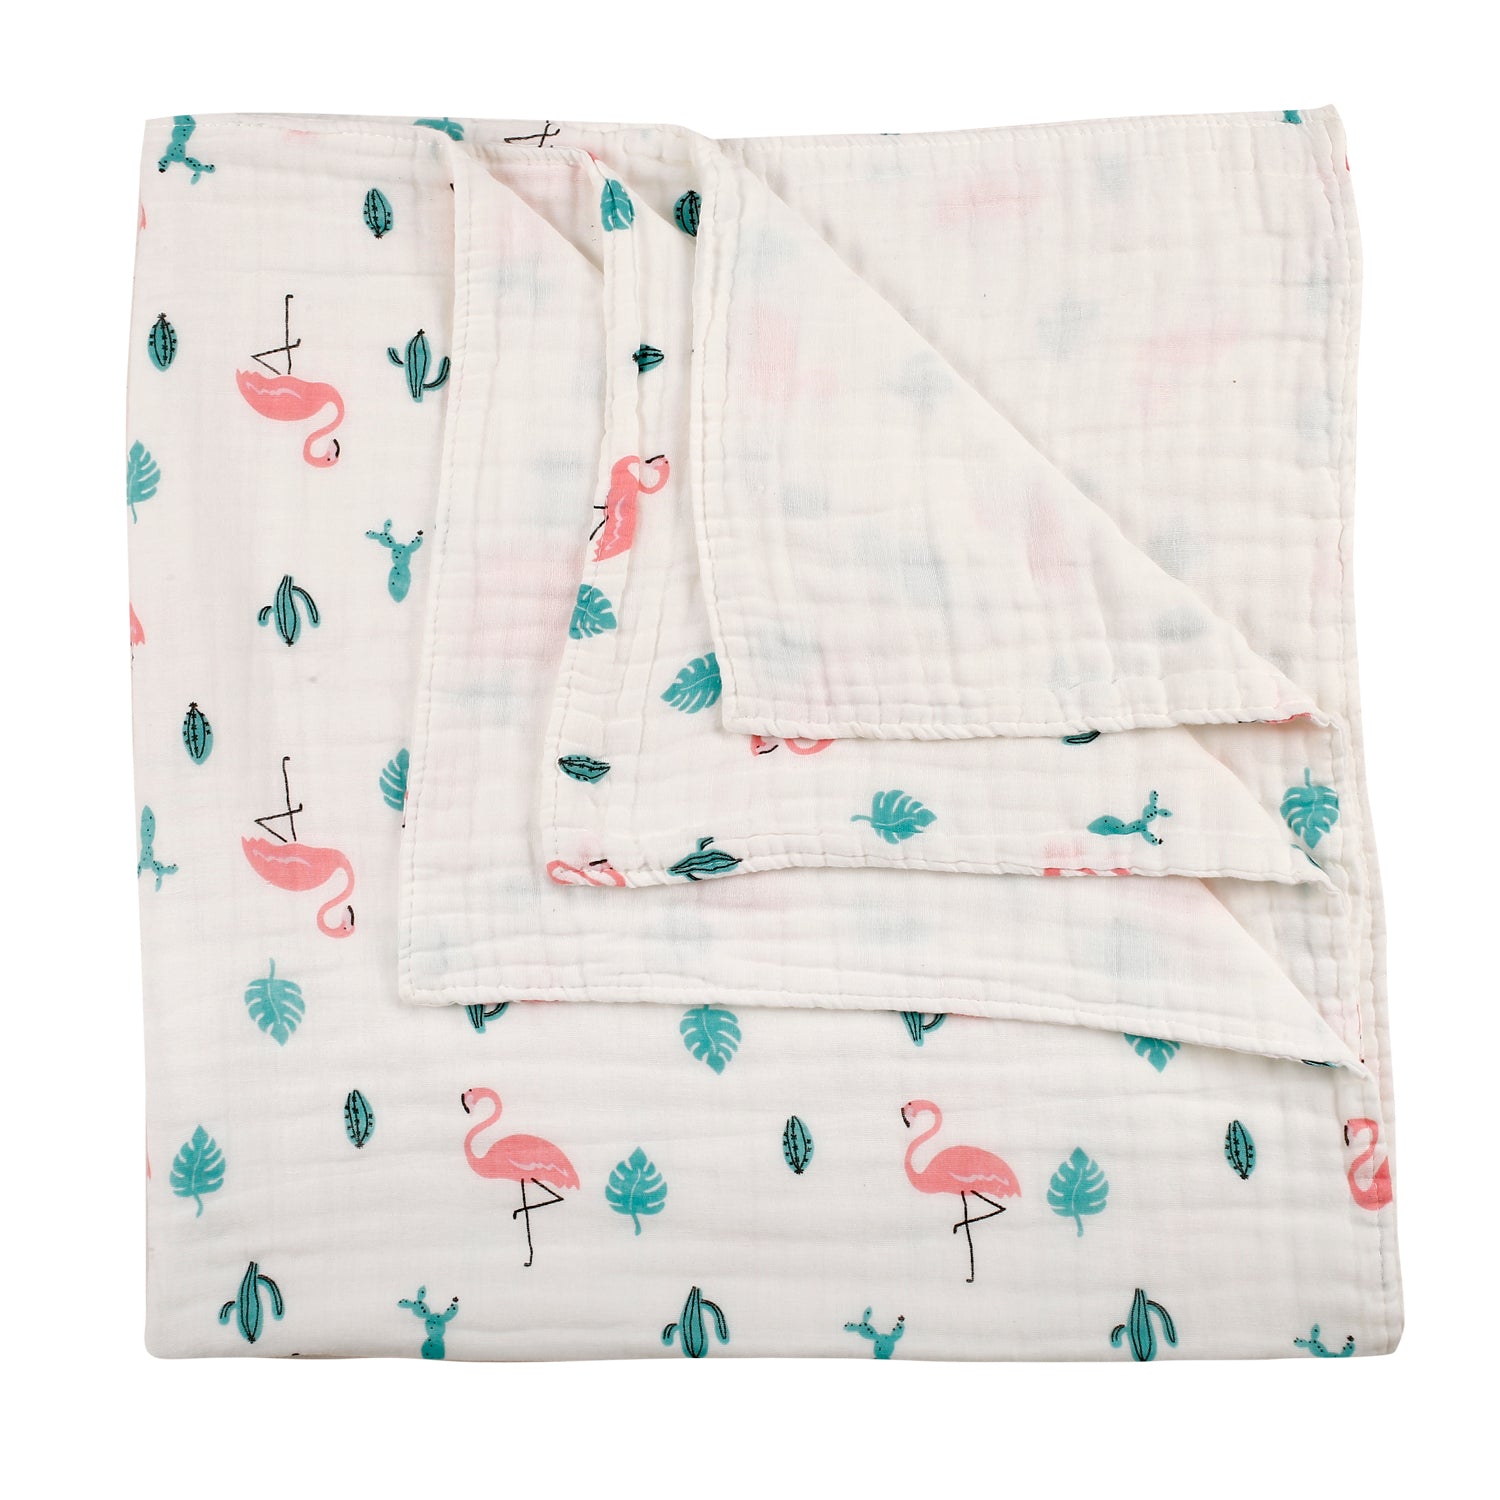 Baby Moo Flamingo White Muslin Blanket